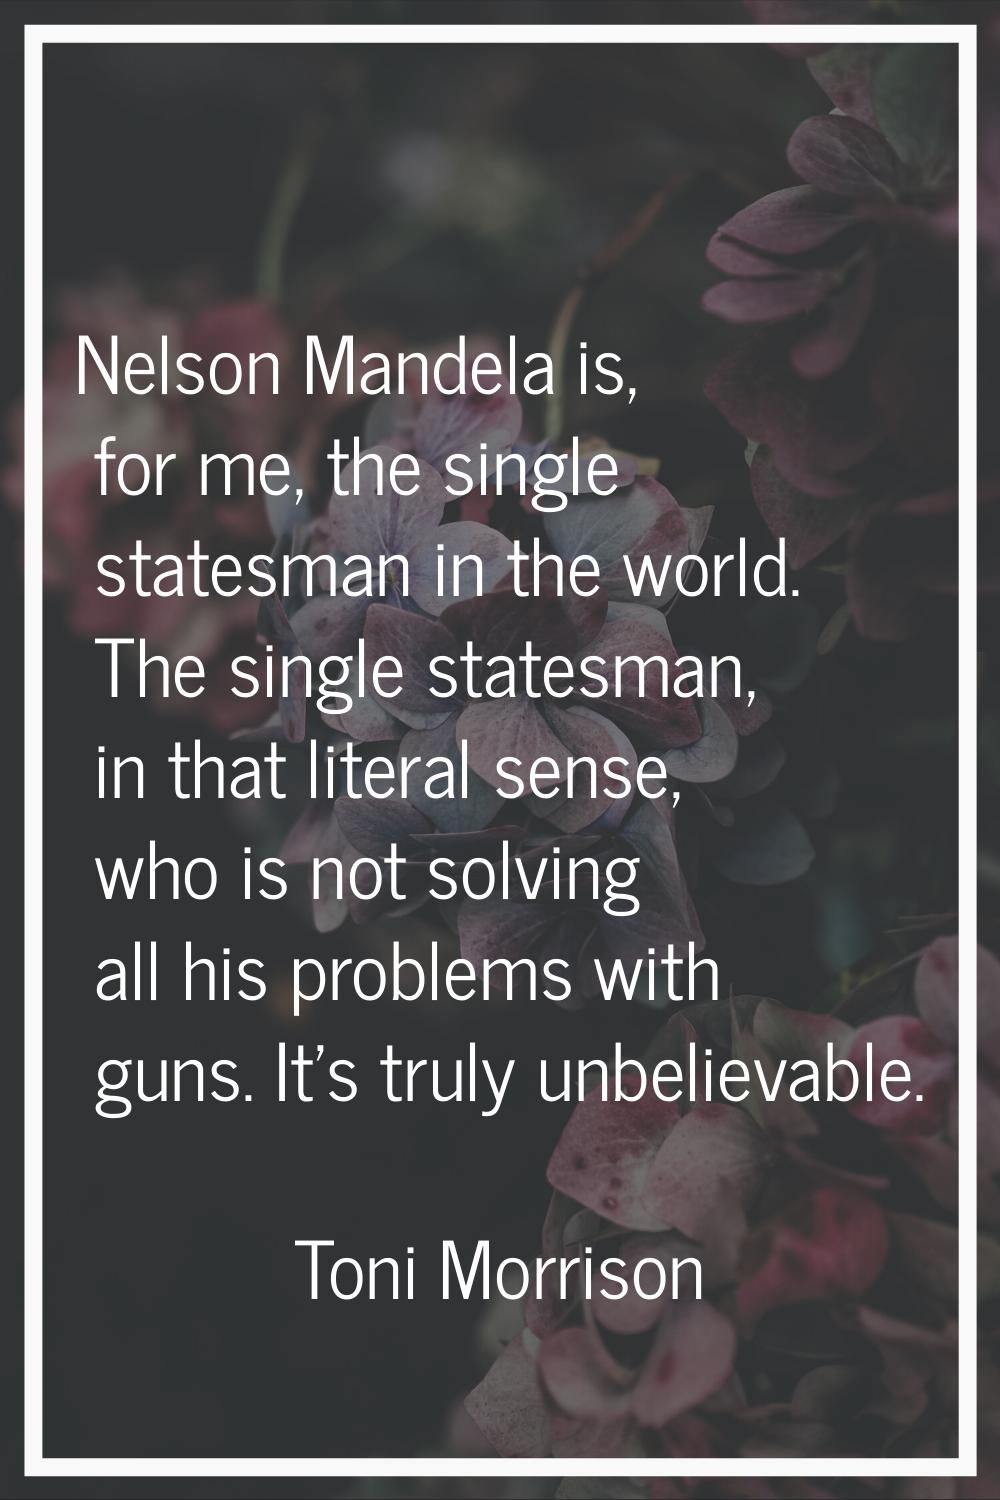 Nelson Mandela is, for me, the single statesman in the world. The single statesman, in that literal